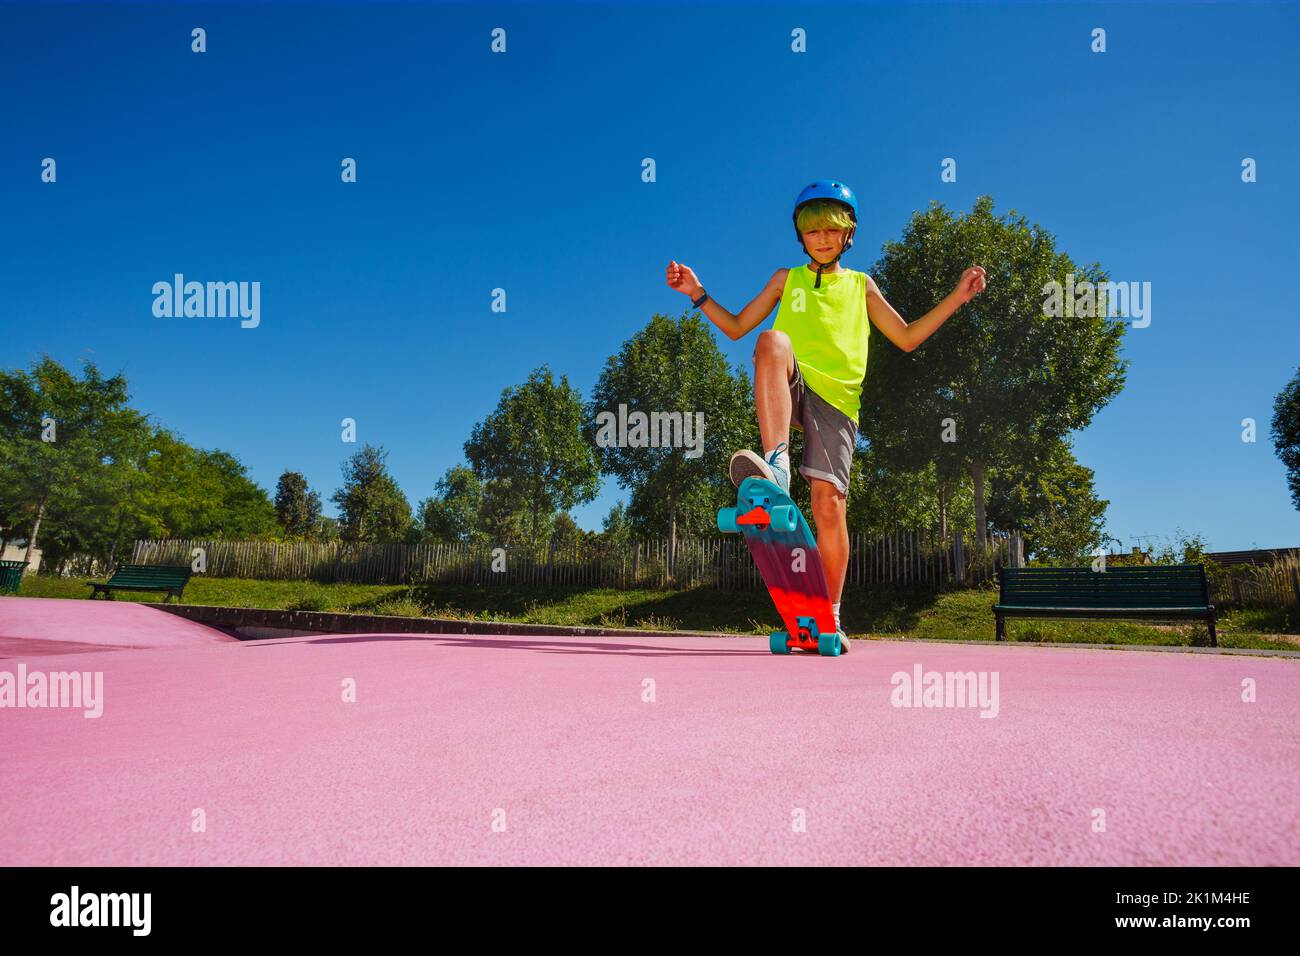 Young boy skate his skateboard at skatepark pose on ramp Stock Photo